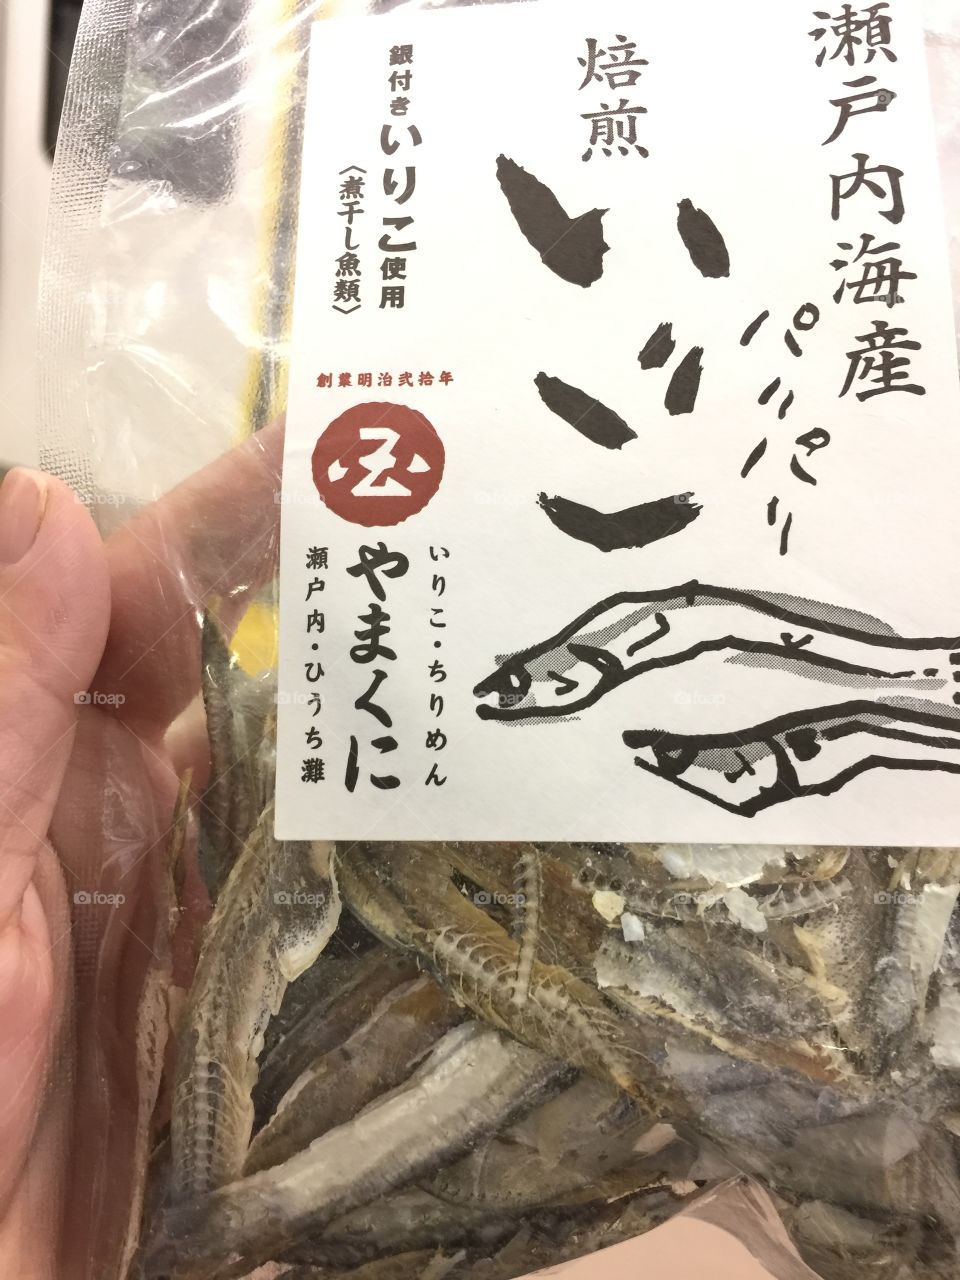 dried fish